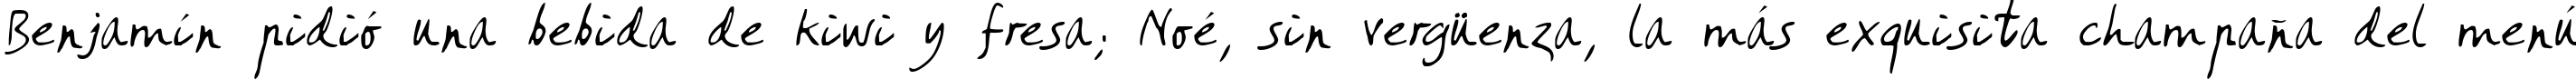 Пример написания шрифтом Amano текста на испанском